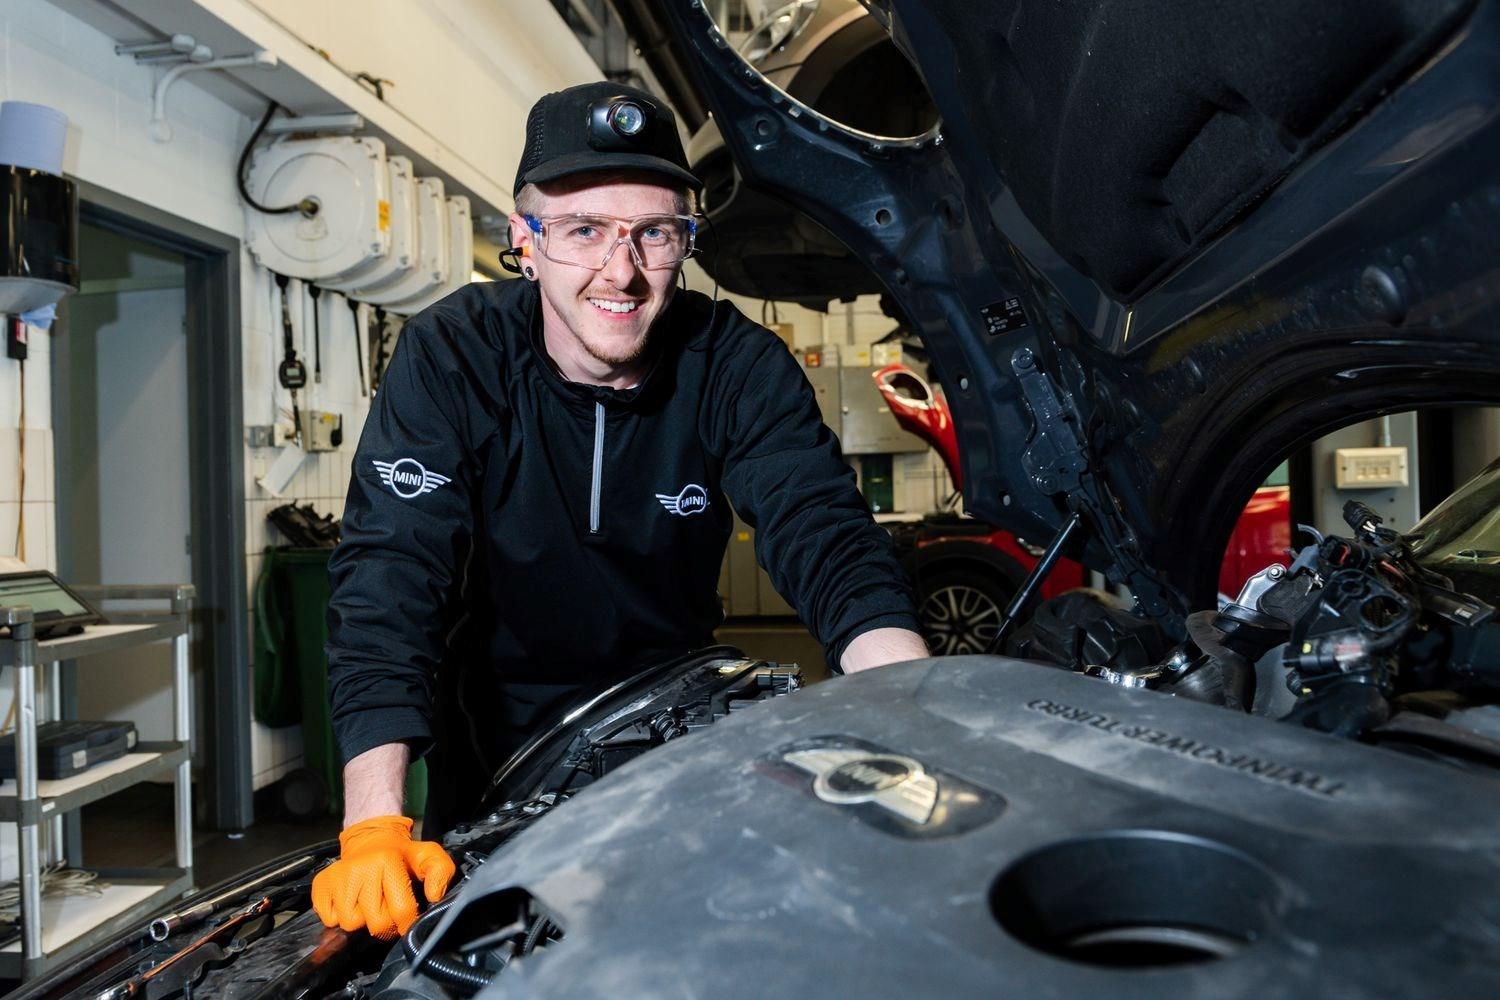 MINI Repair Specialist smiles at camera while repairing an engine at the MINI Repair Centre at Bavarian MINI